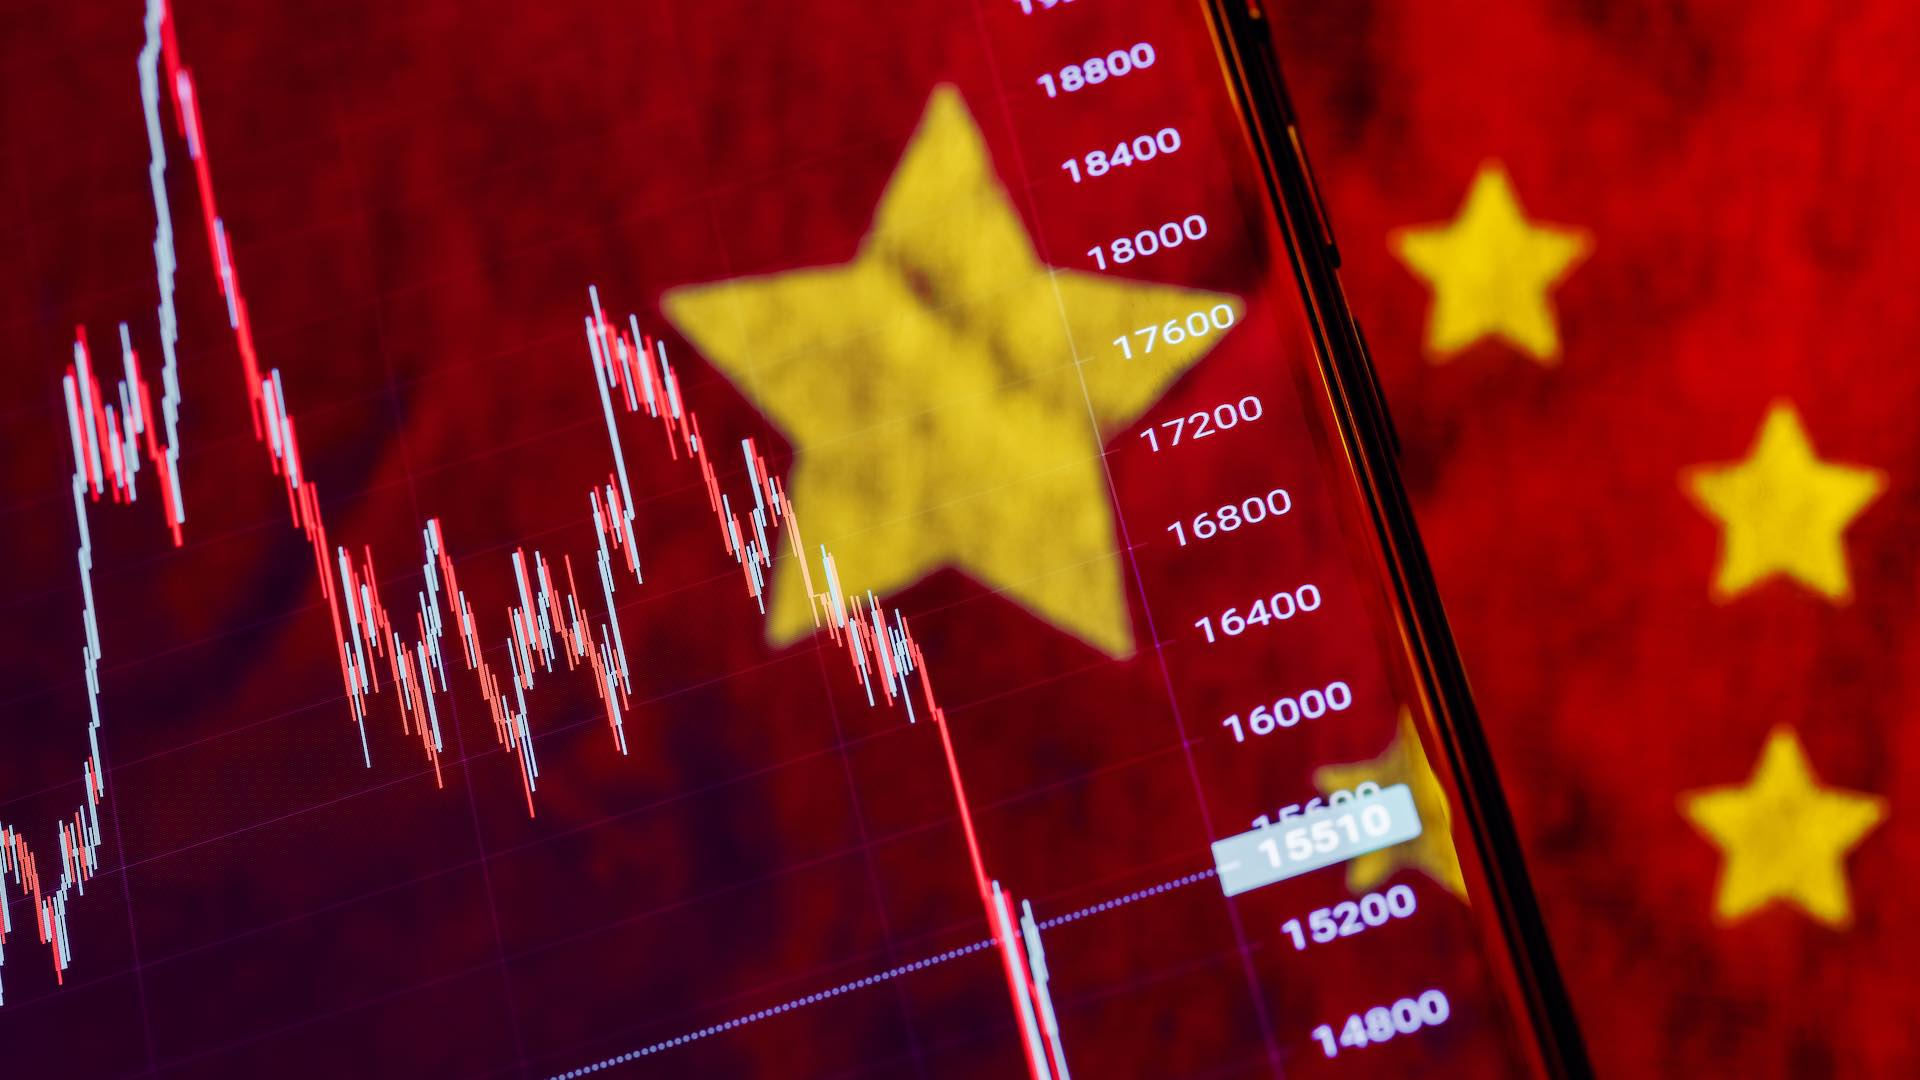 Economic downturn hits China's global standing